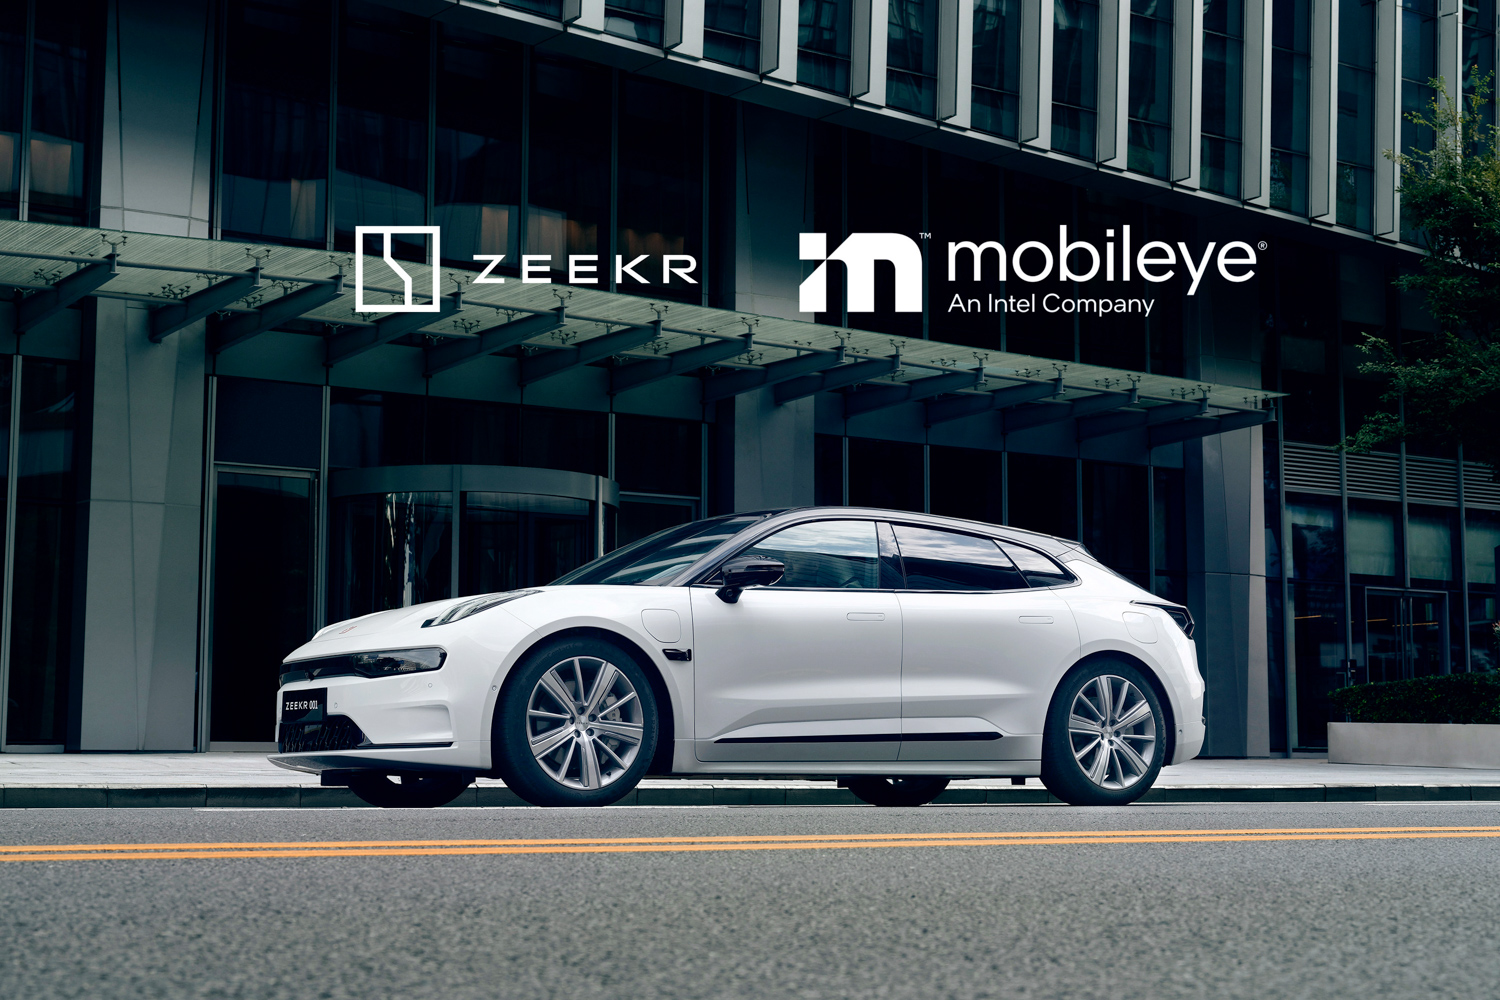 Car News | Zeekr and Mobileye autonomous vehicle partnership | CompleteCar.ie